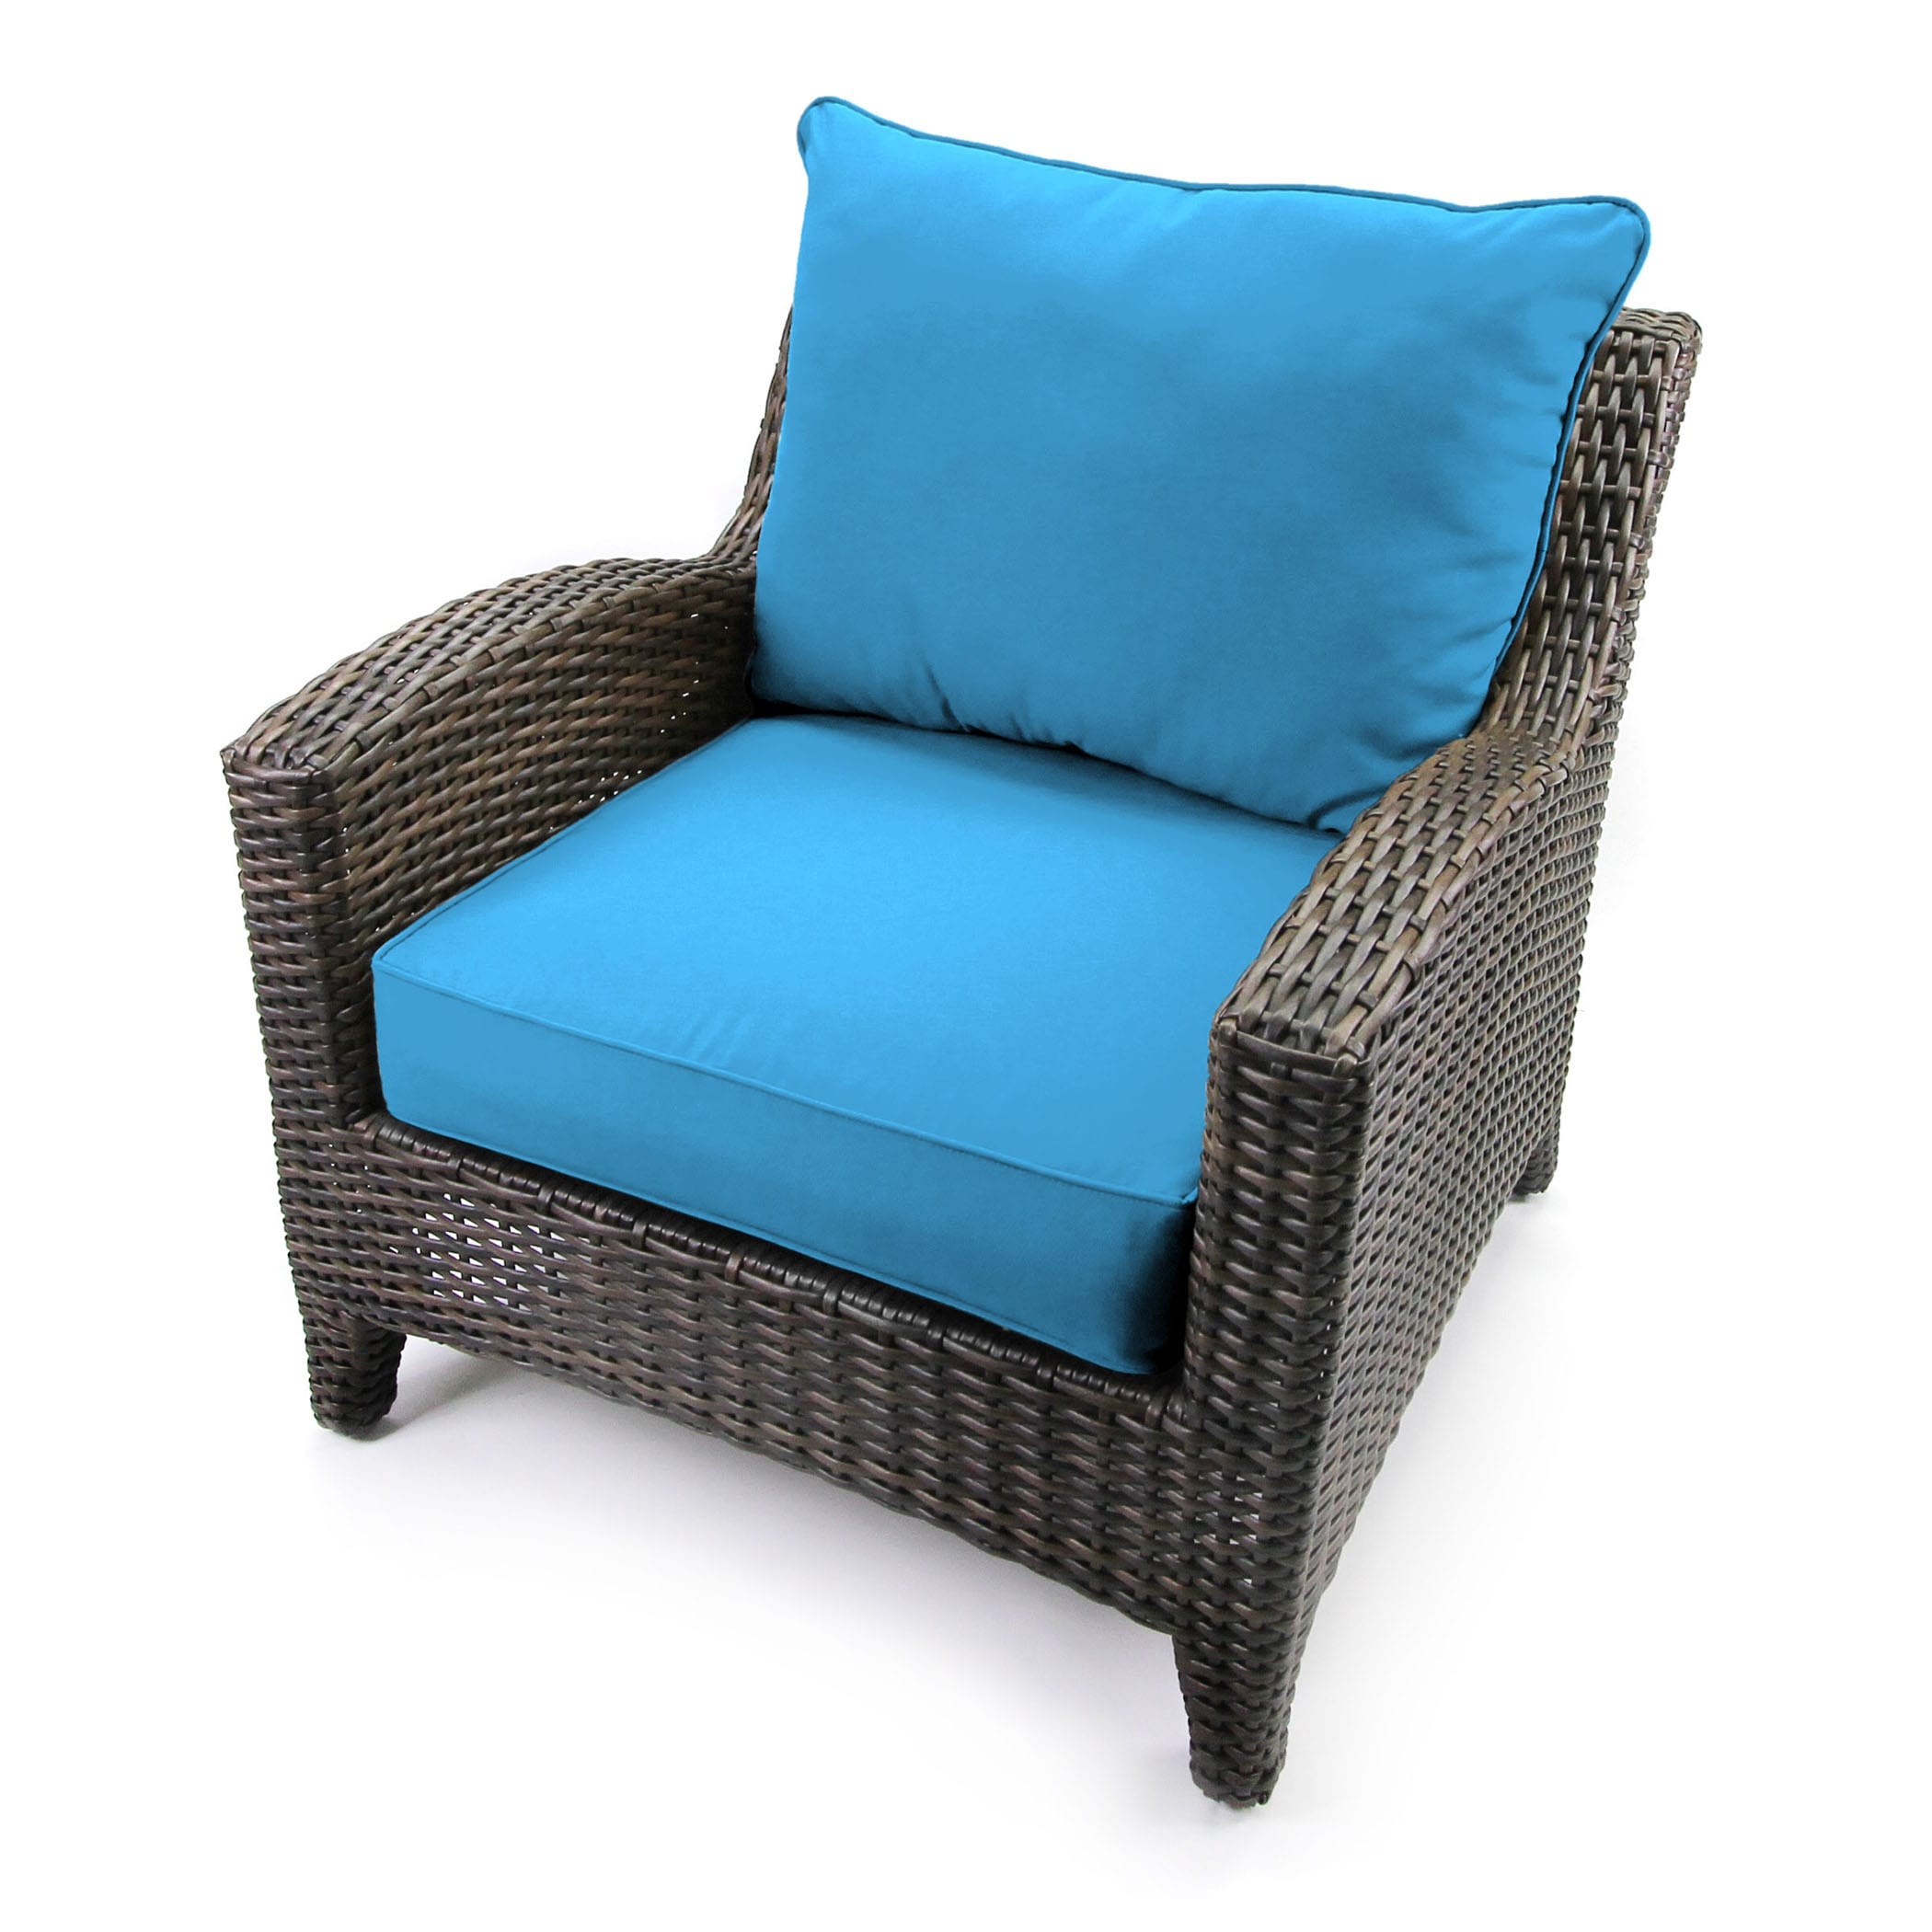 Sunbrella 24" x 46.5" Blue Solid Outdoor Deep Seat Chair Cushion Set with Welt - 46.5'' L x 24'' W x 6'' H